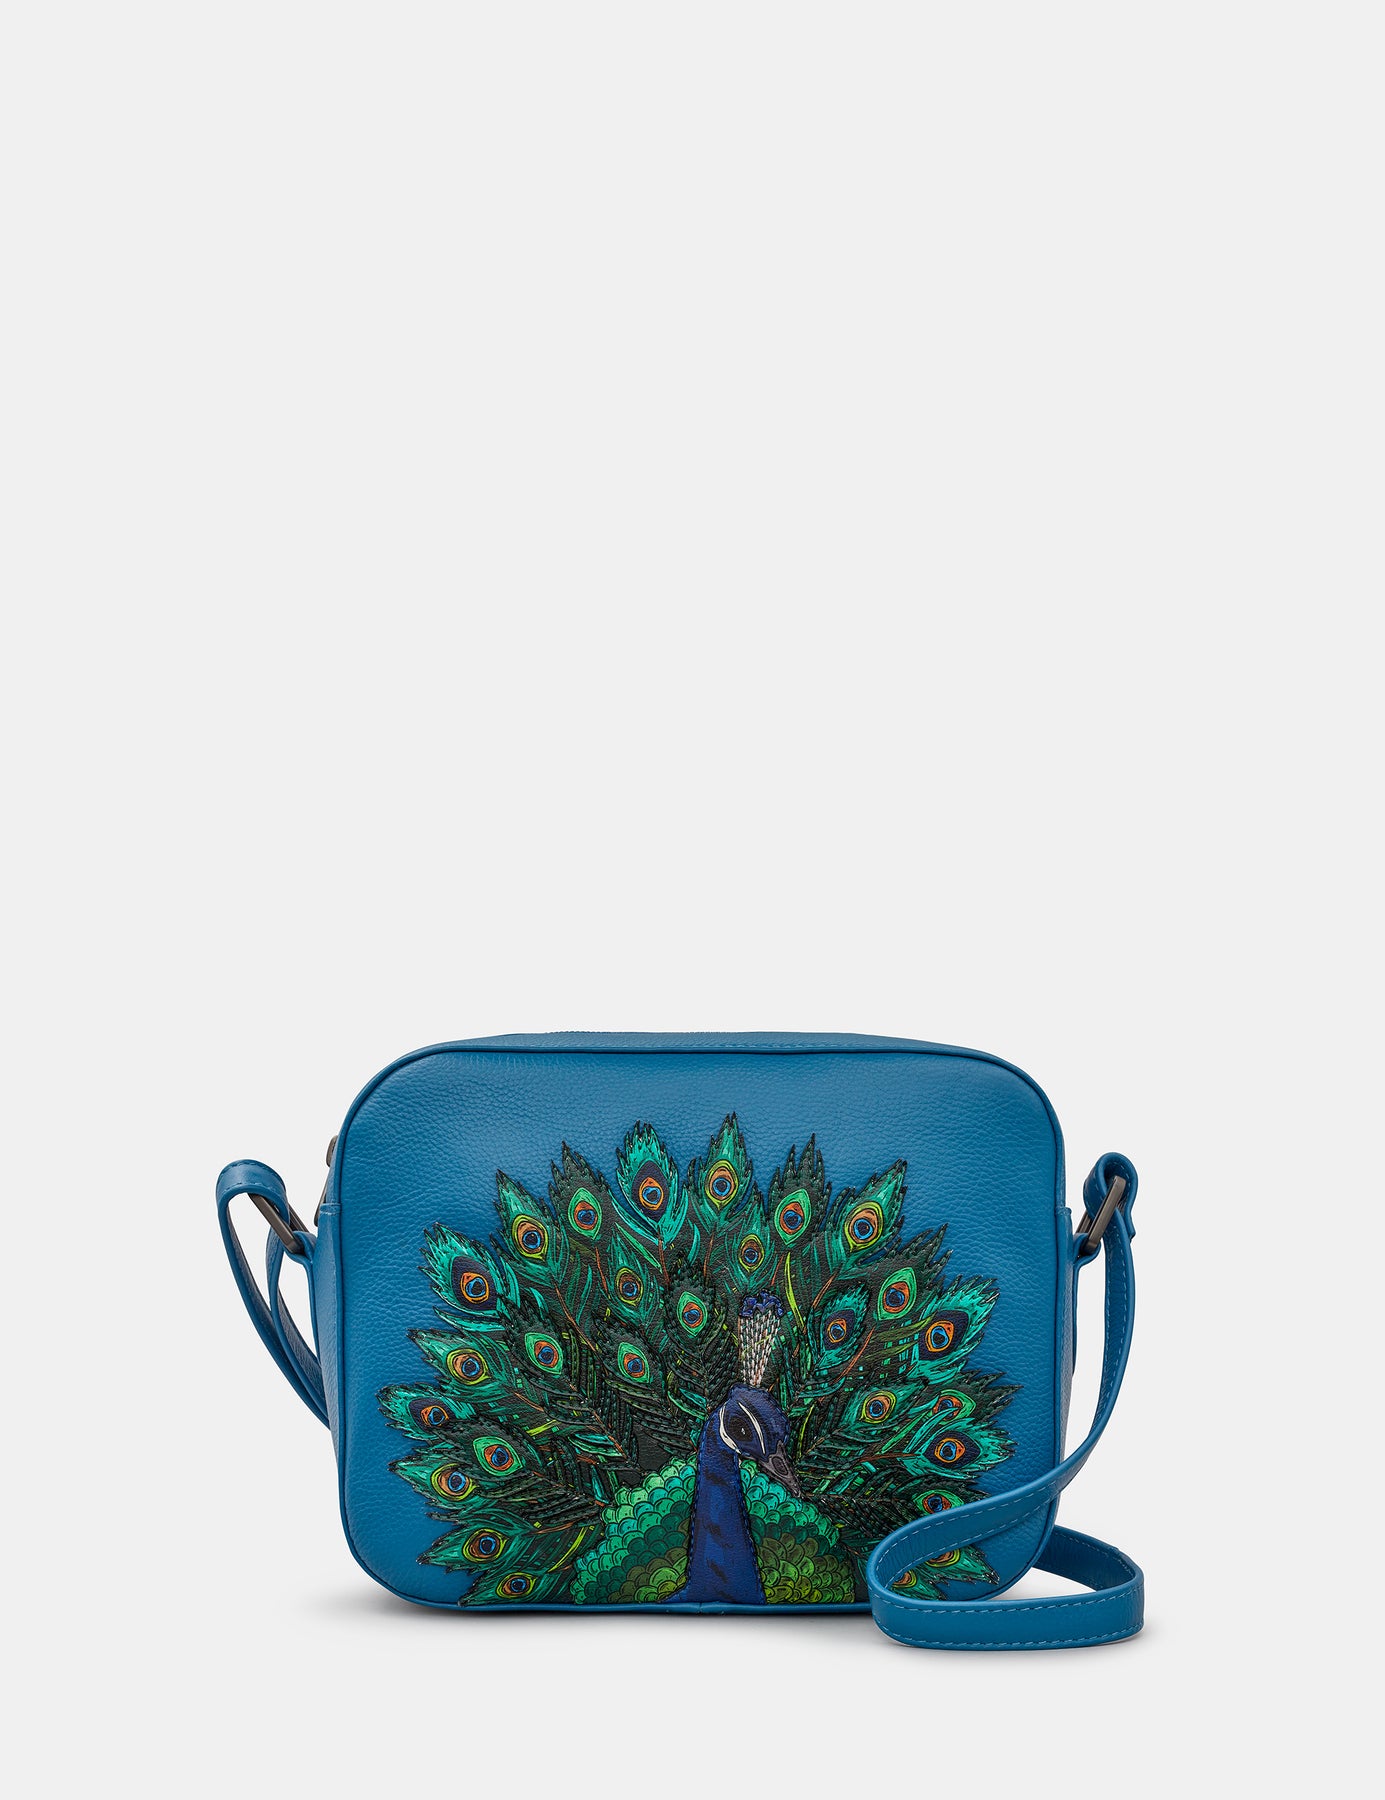 Veowalk Shiny Sequins Peacock Embroidered Women Canvas Totes Bag, Summer  Shopping Shoulder Bag Vintage Beaded String Handbag